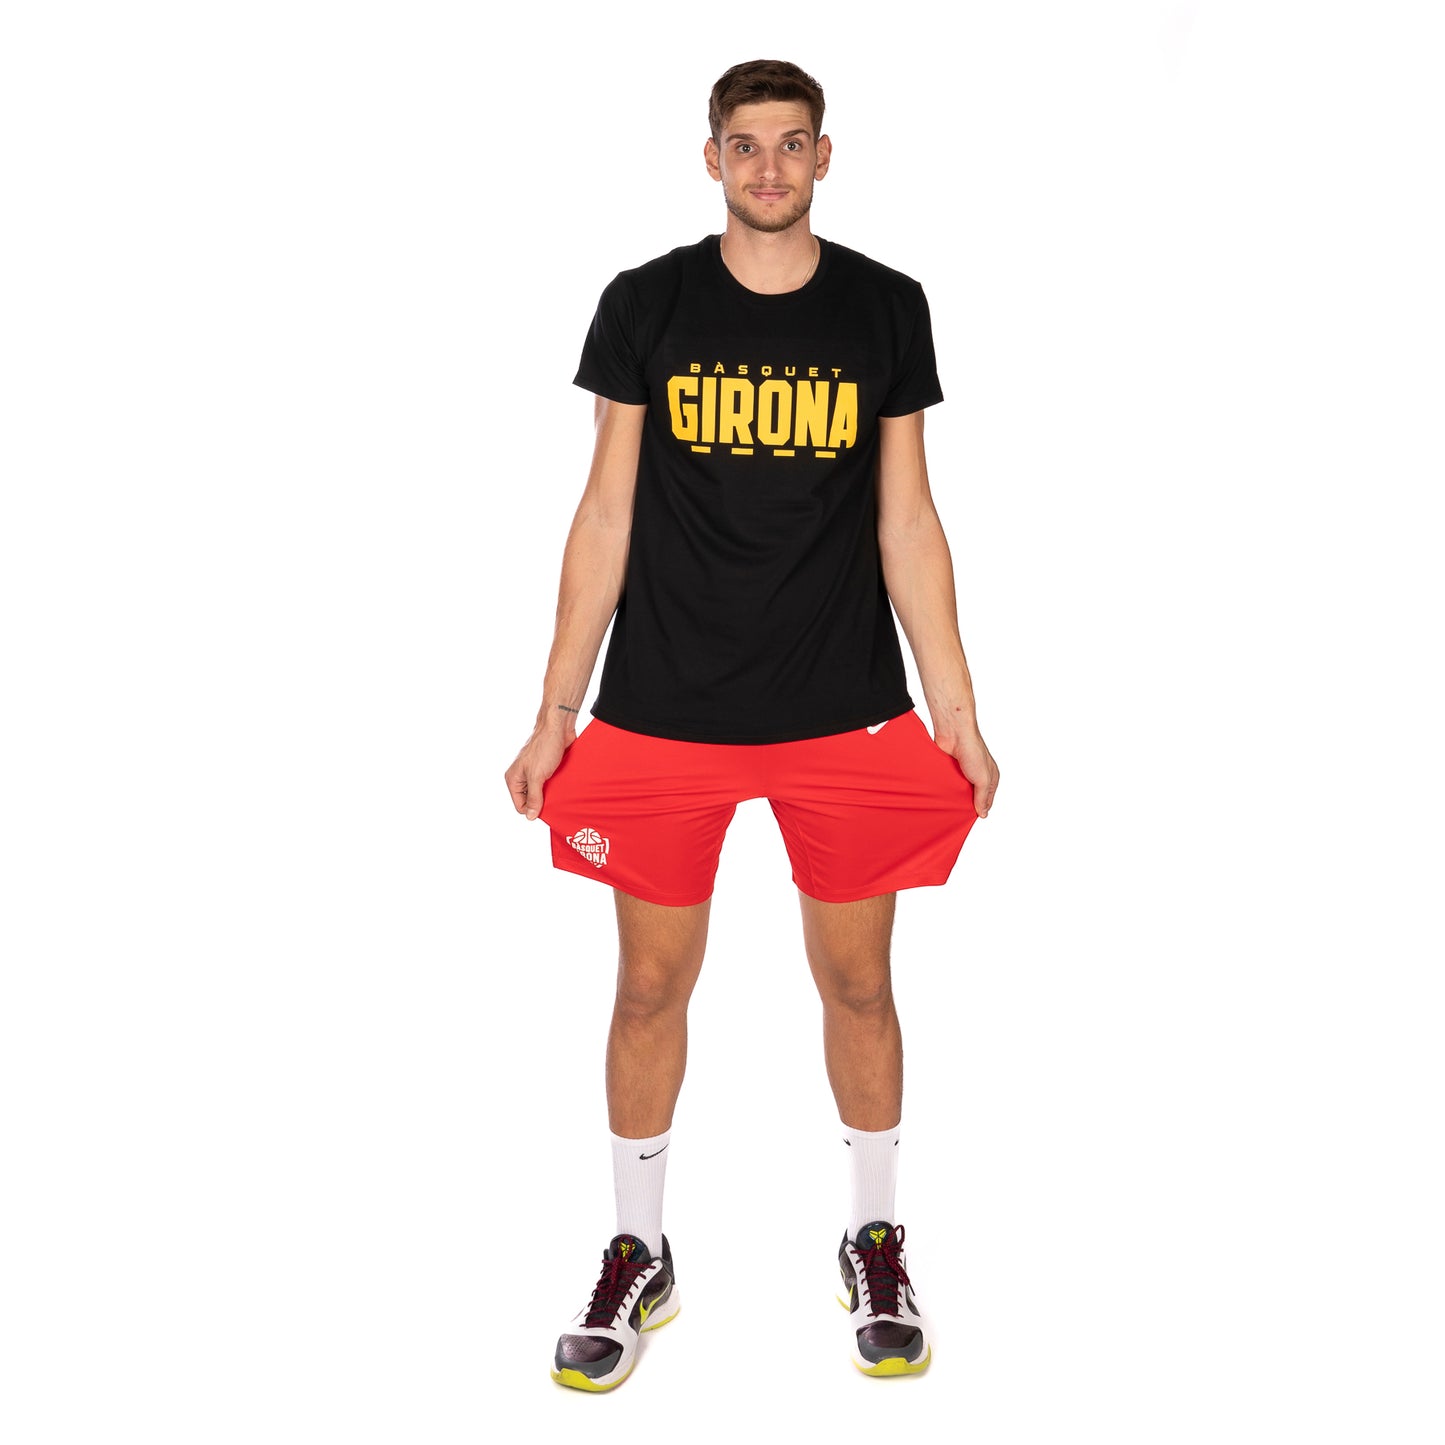 Girona Black Organic Cotton Basketball T-shirt